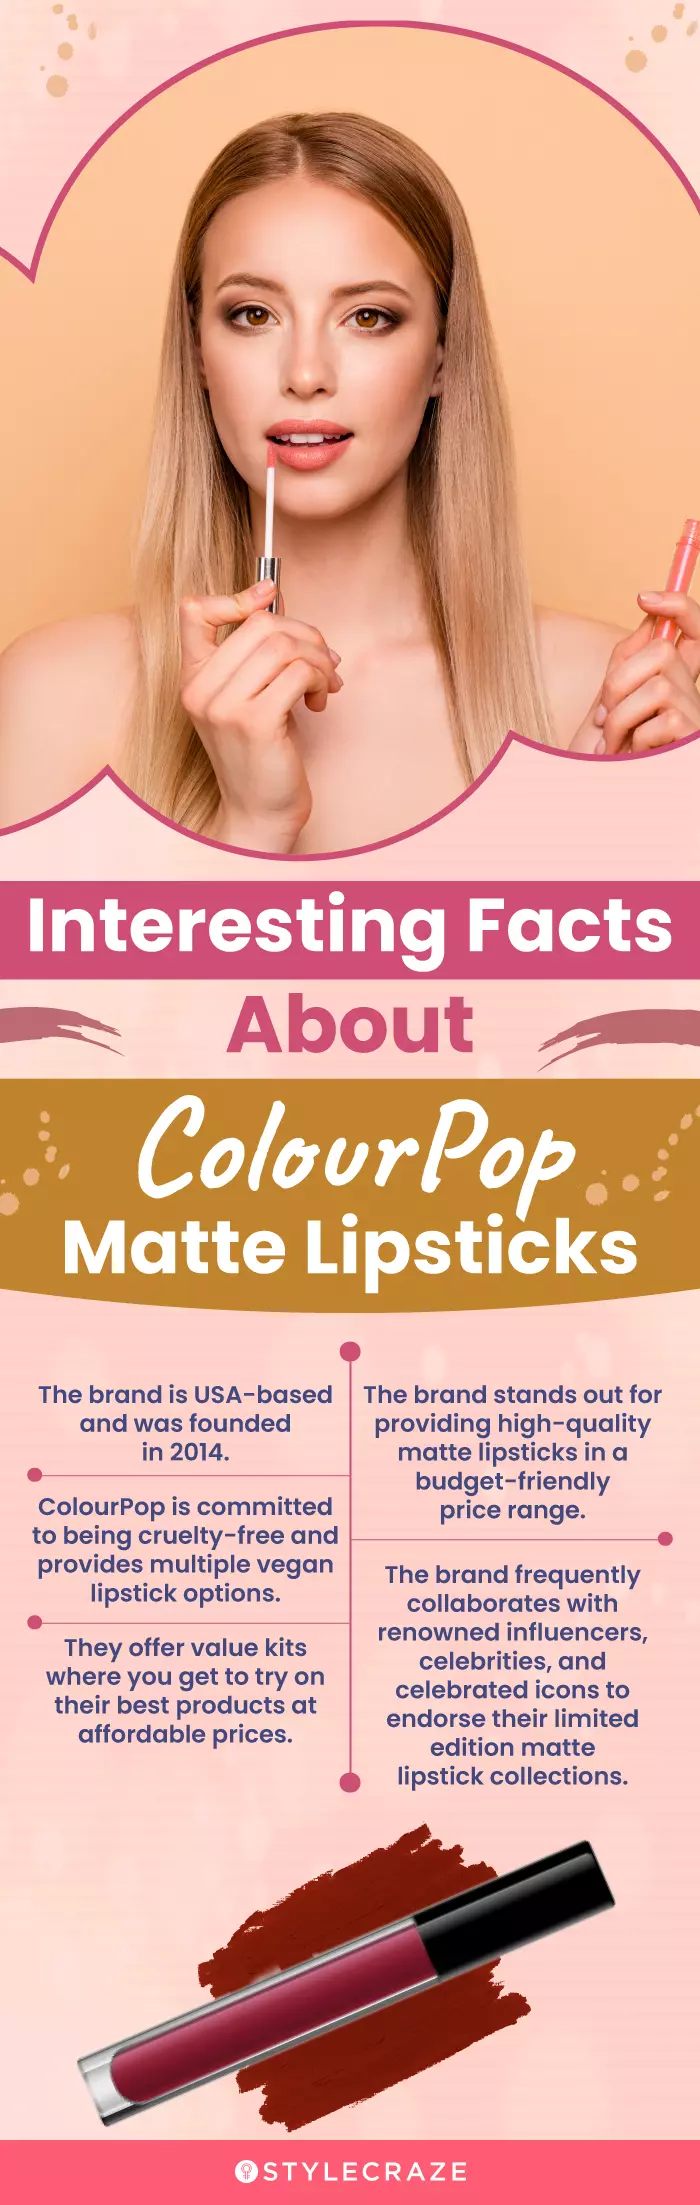 5 Interesting Facts About ColourPop Matte Lipsticks (infographic)